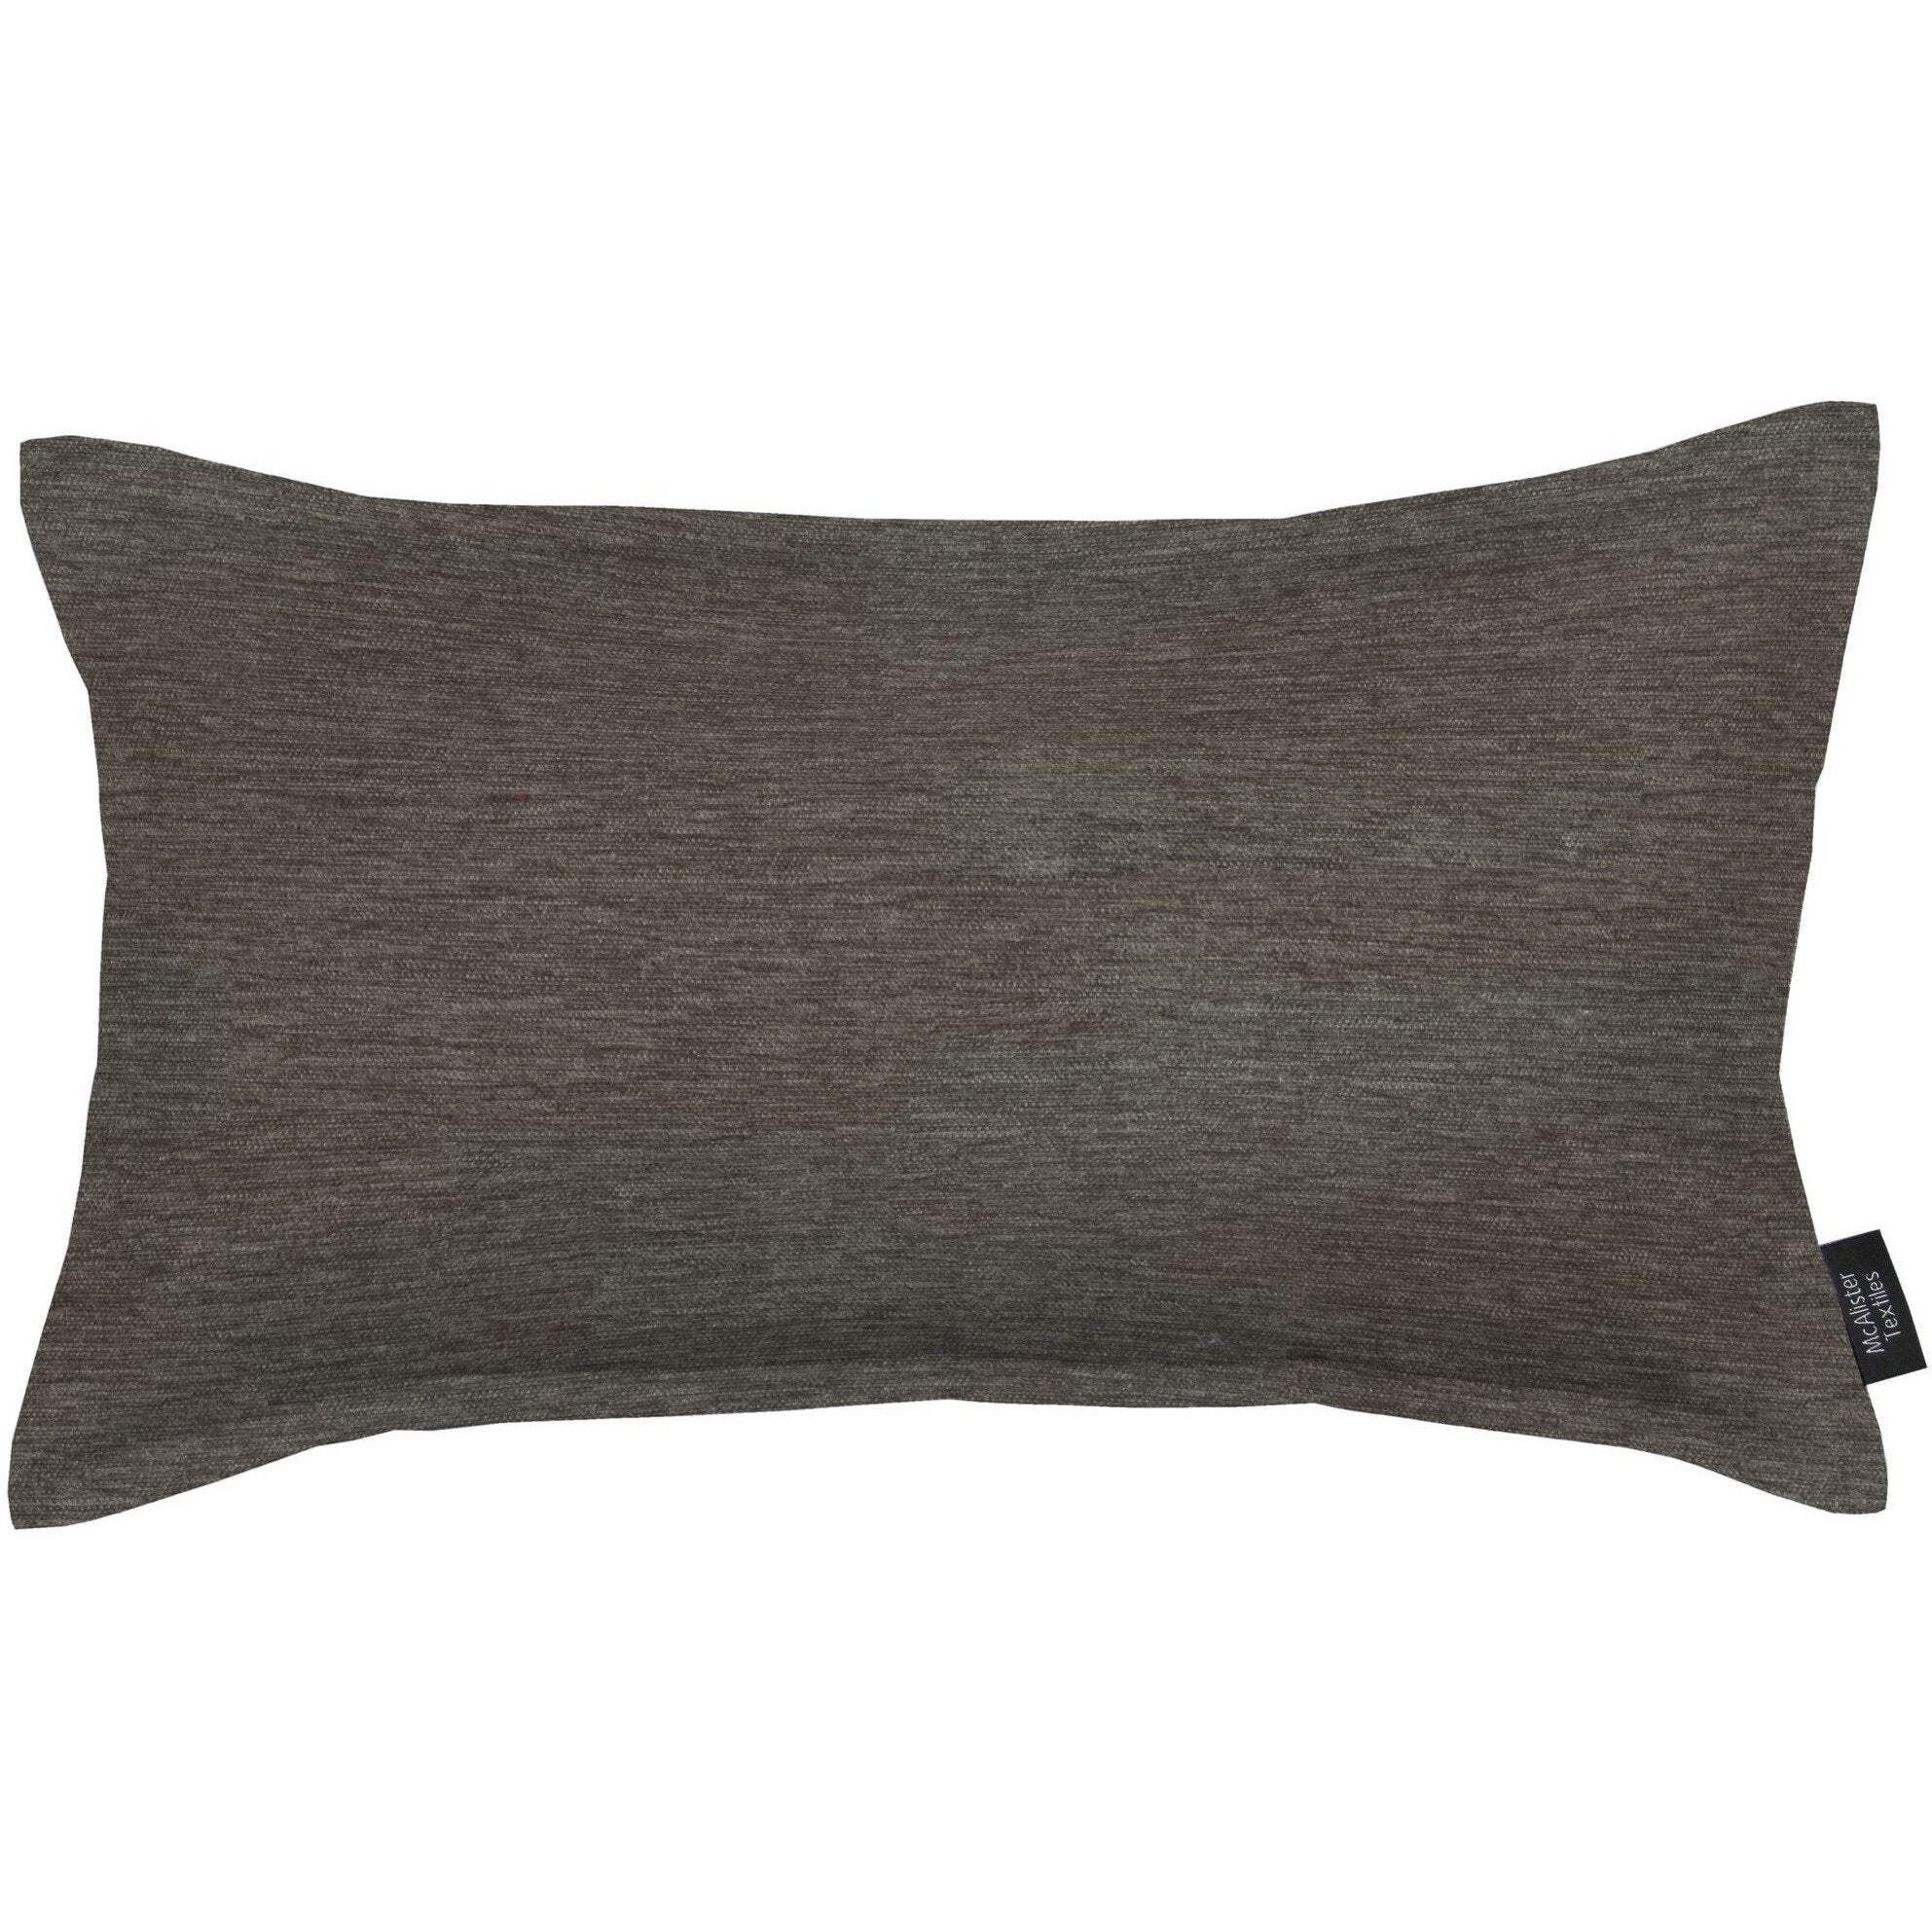 McAlister Textiles Plain Chenille Charcoal Grey Pillow Pillow Cover Only 50cm x 30cm 